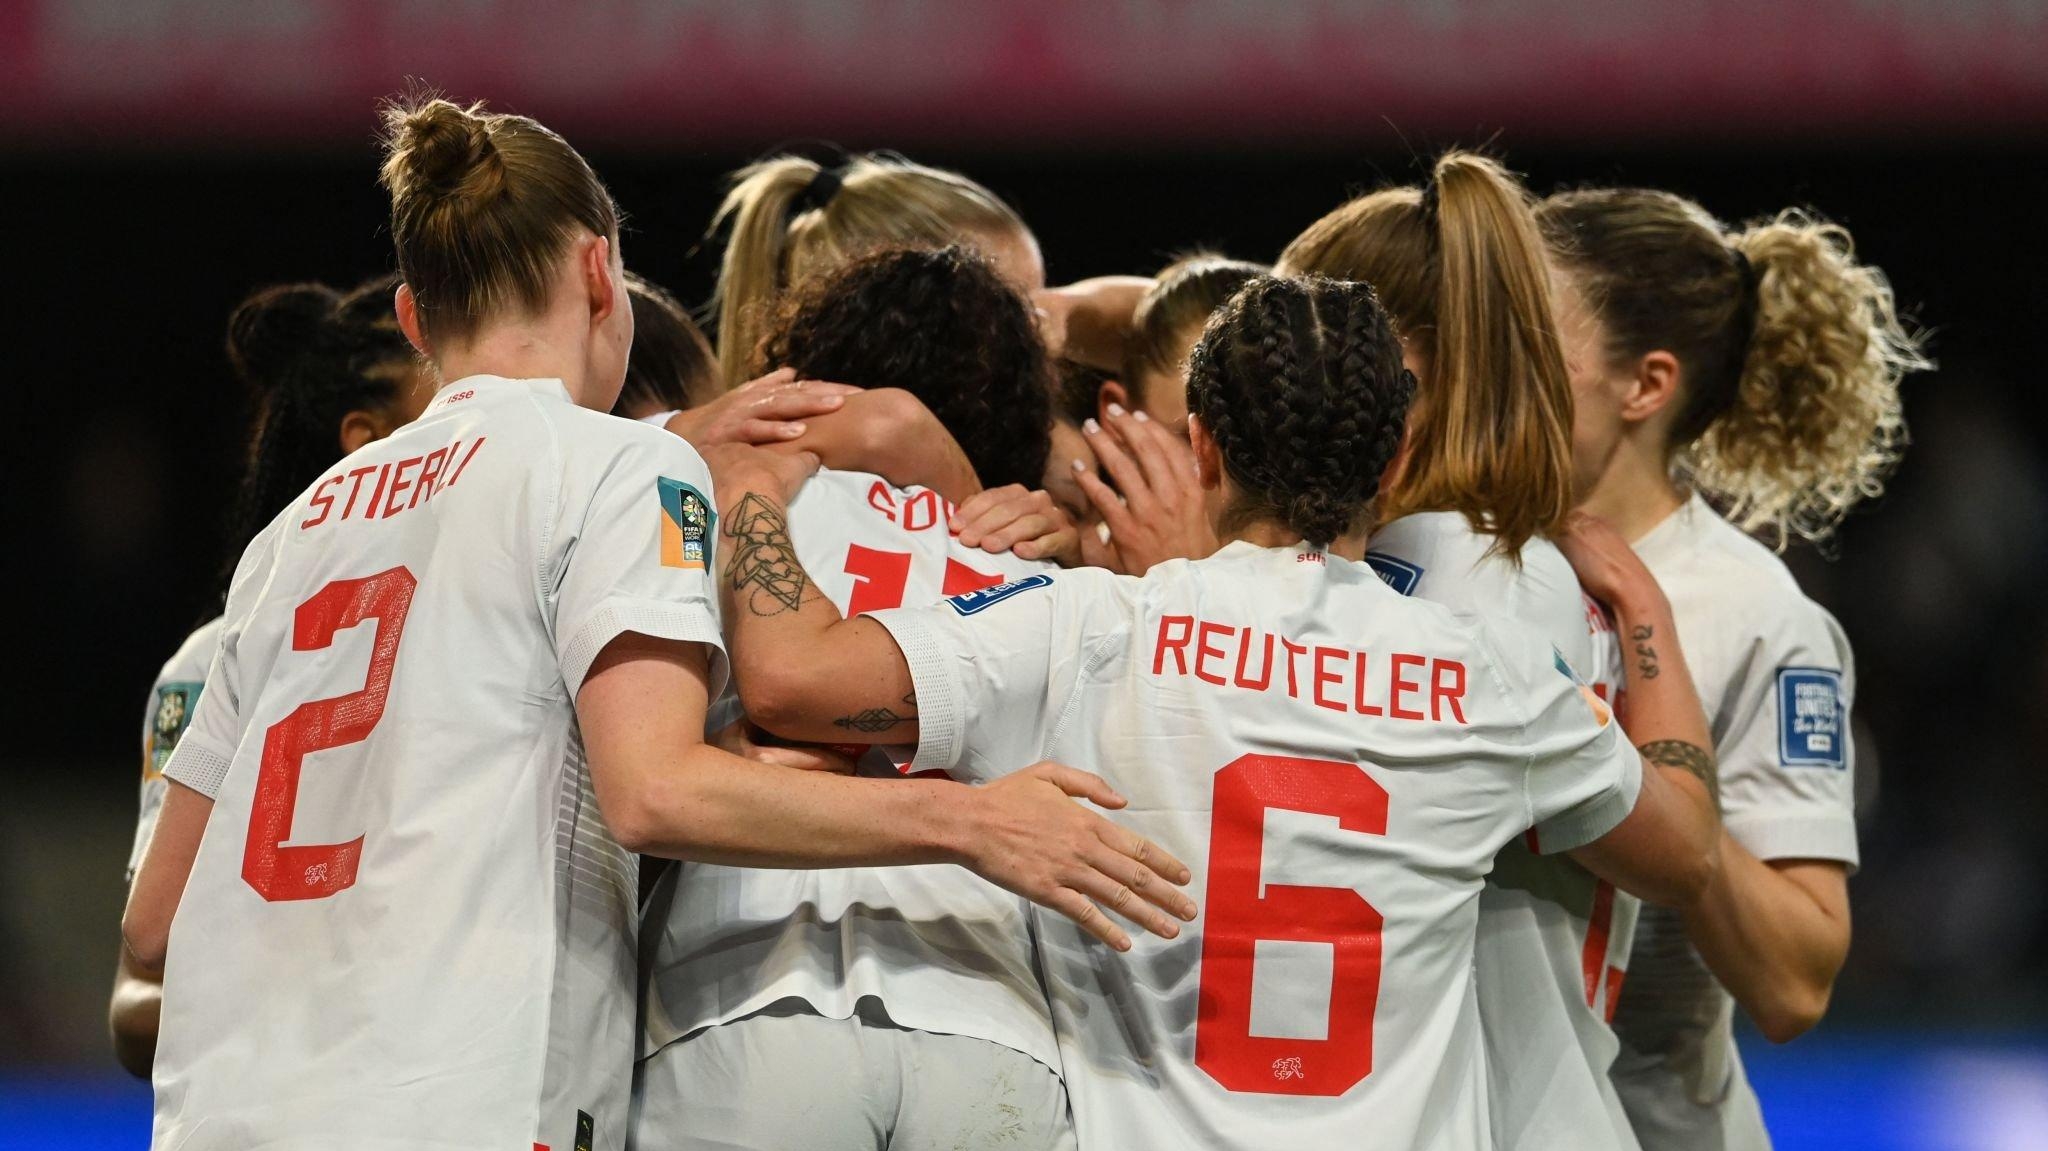 Switzerland beat Philippines in thrilling Women's World Cup game